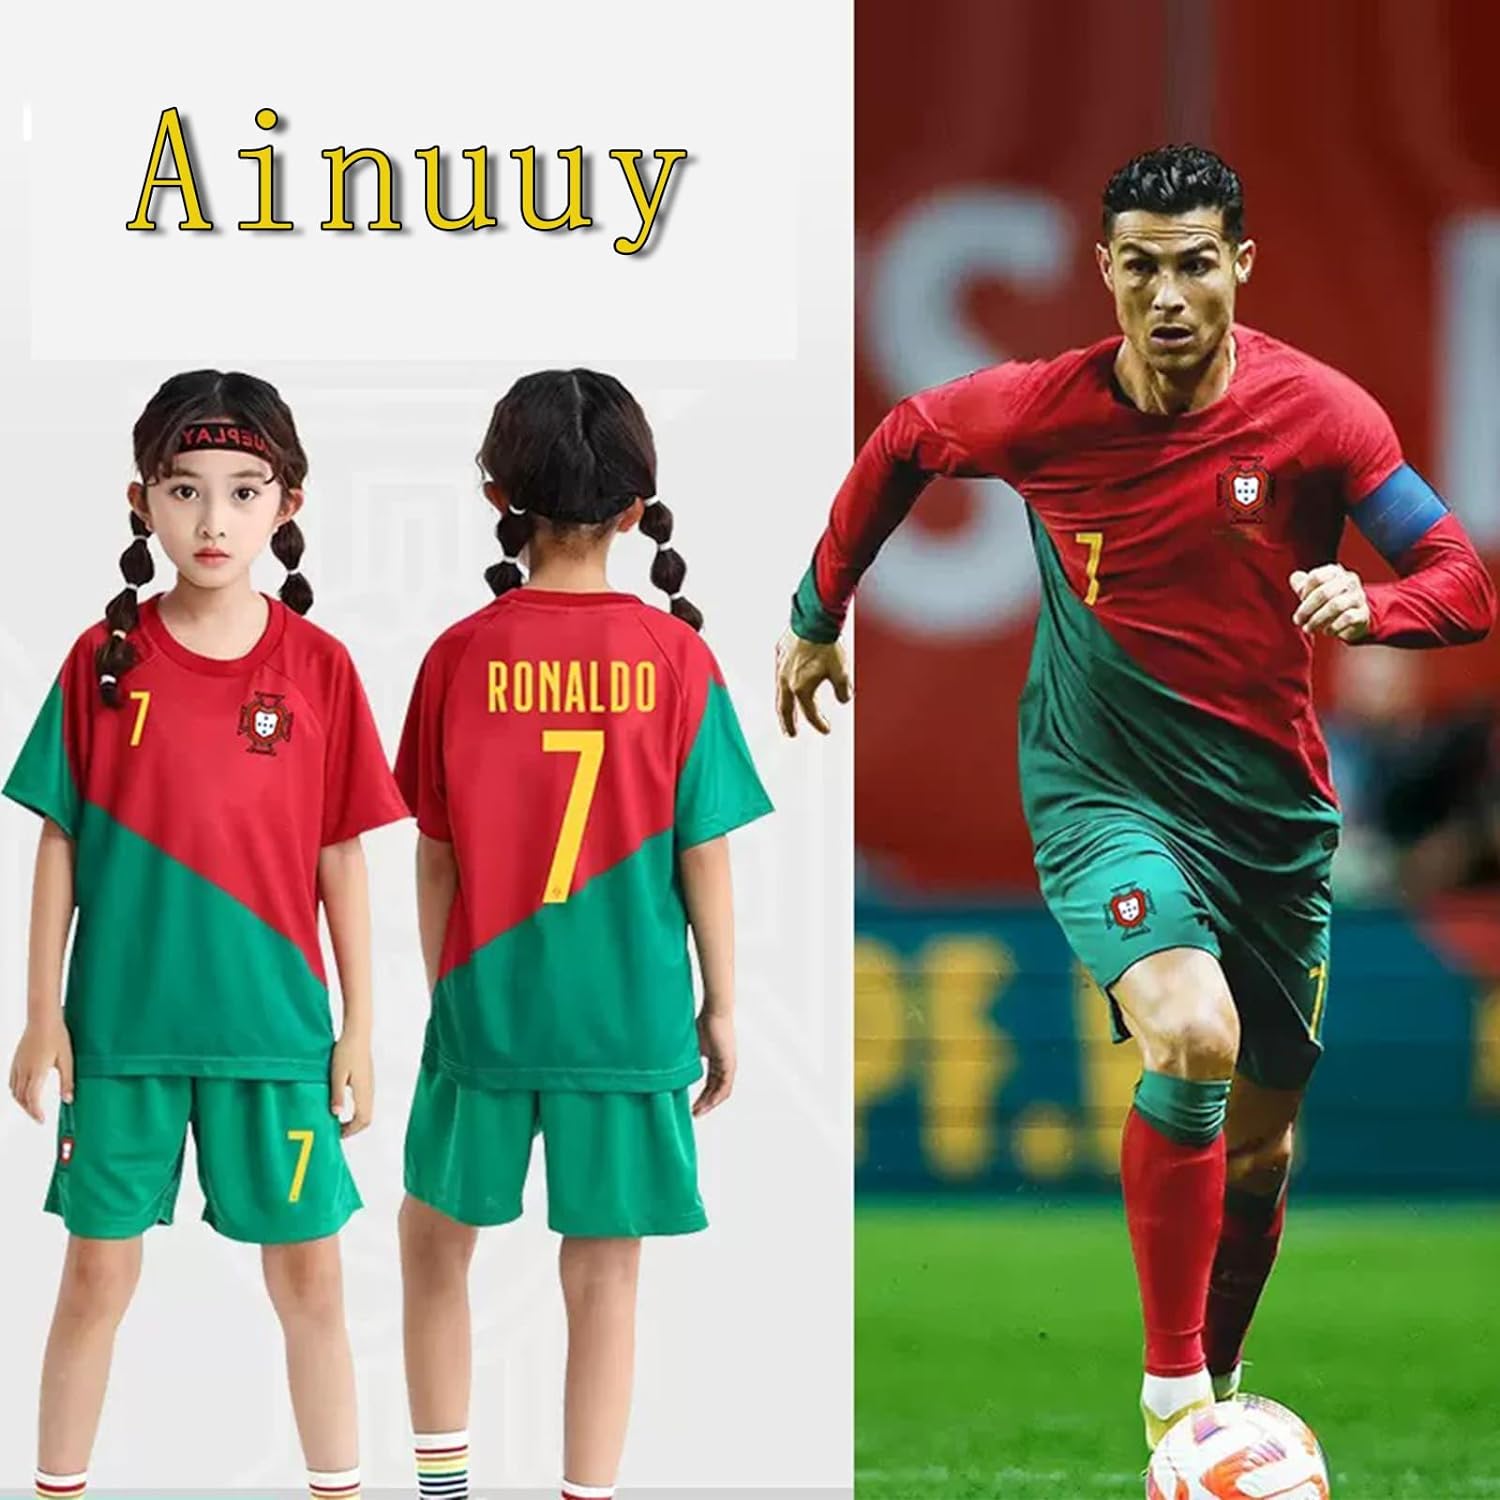 Ainuuy Football Jersey Set for Kids, 7 Ronaldo Boys Girls Football Jersey Kit, Children Football Uniforms Short-sleeved Football Shirts, Football Soccer Jersey Set Youth Sizes Football Tracksuits